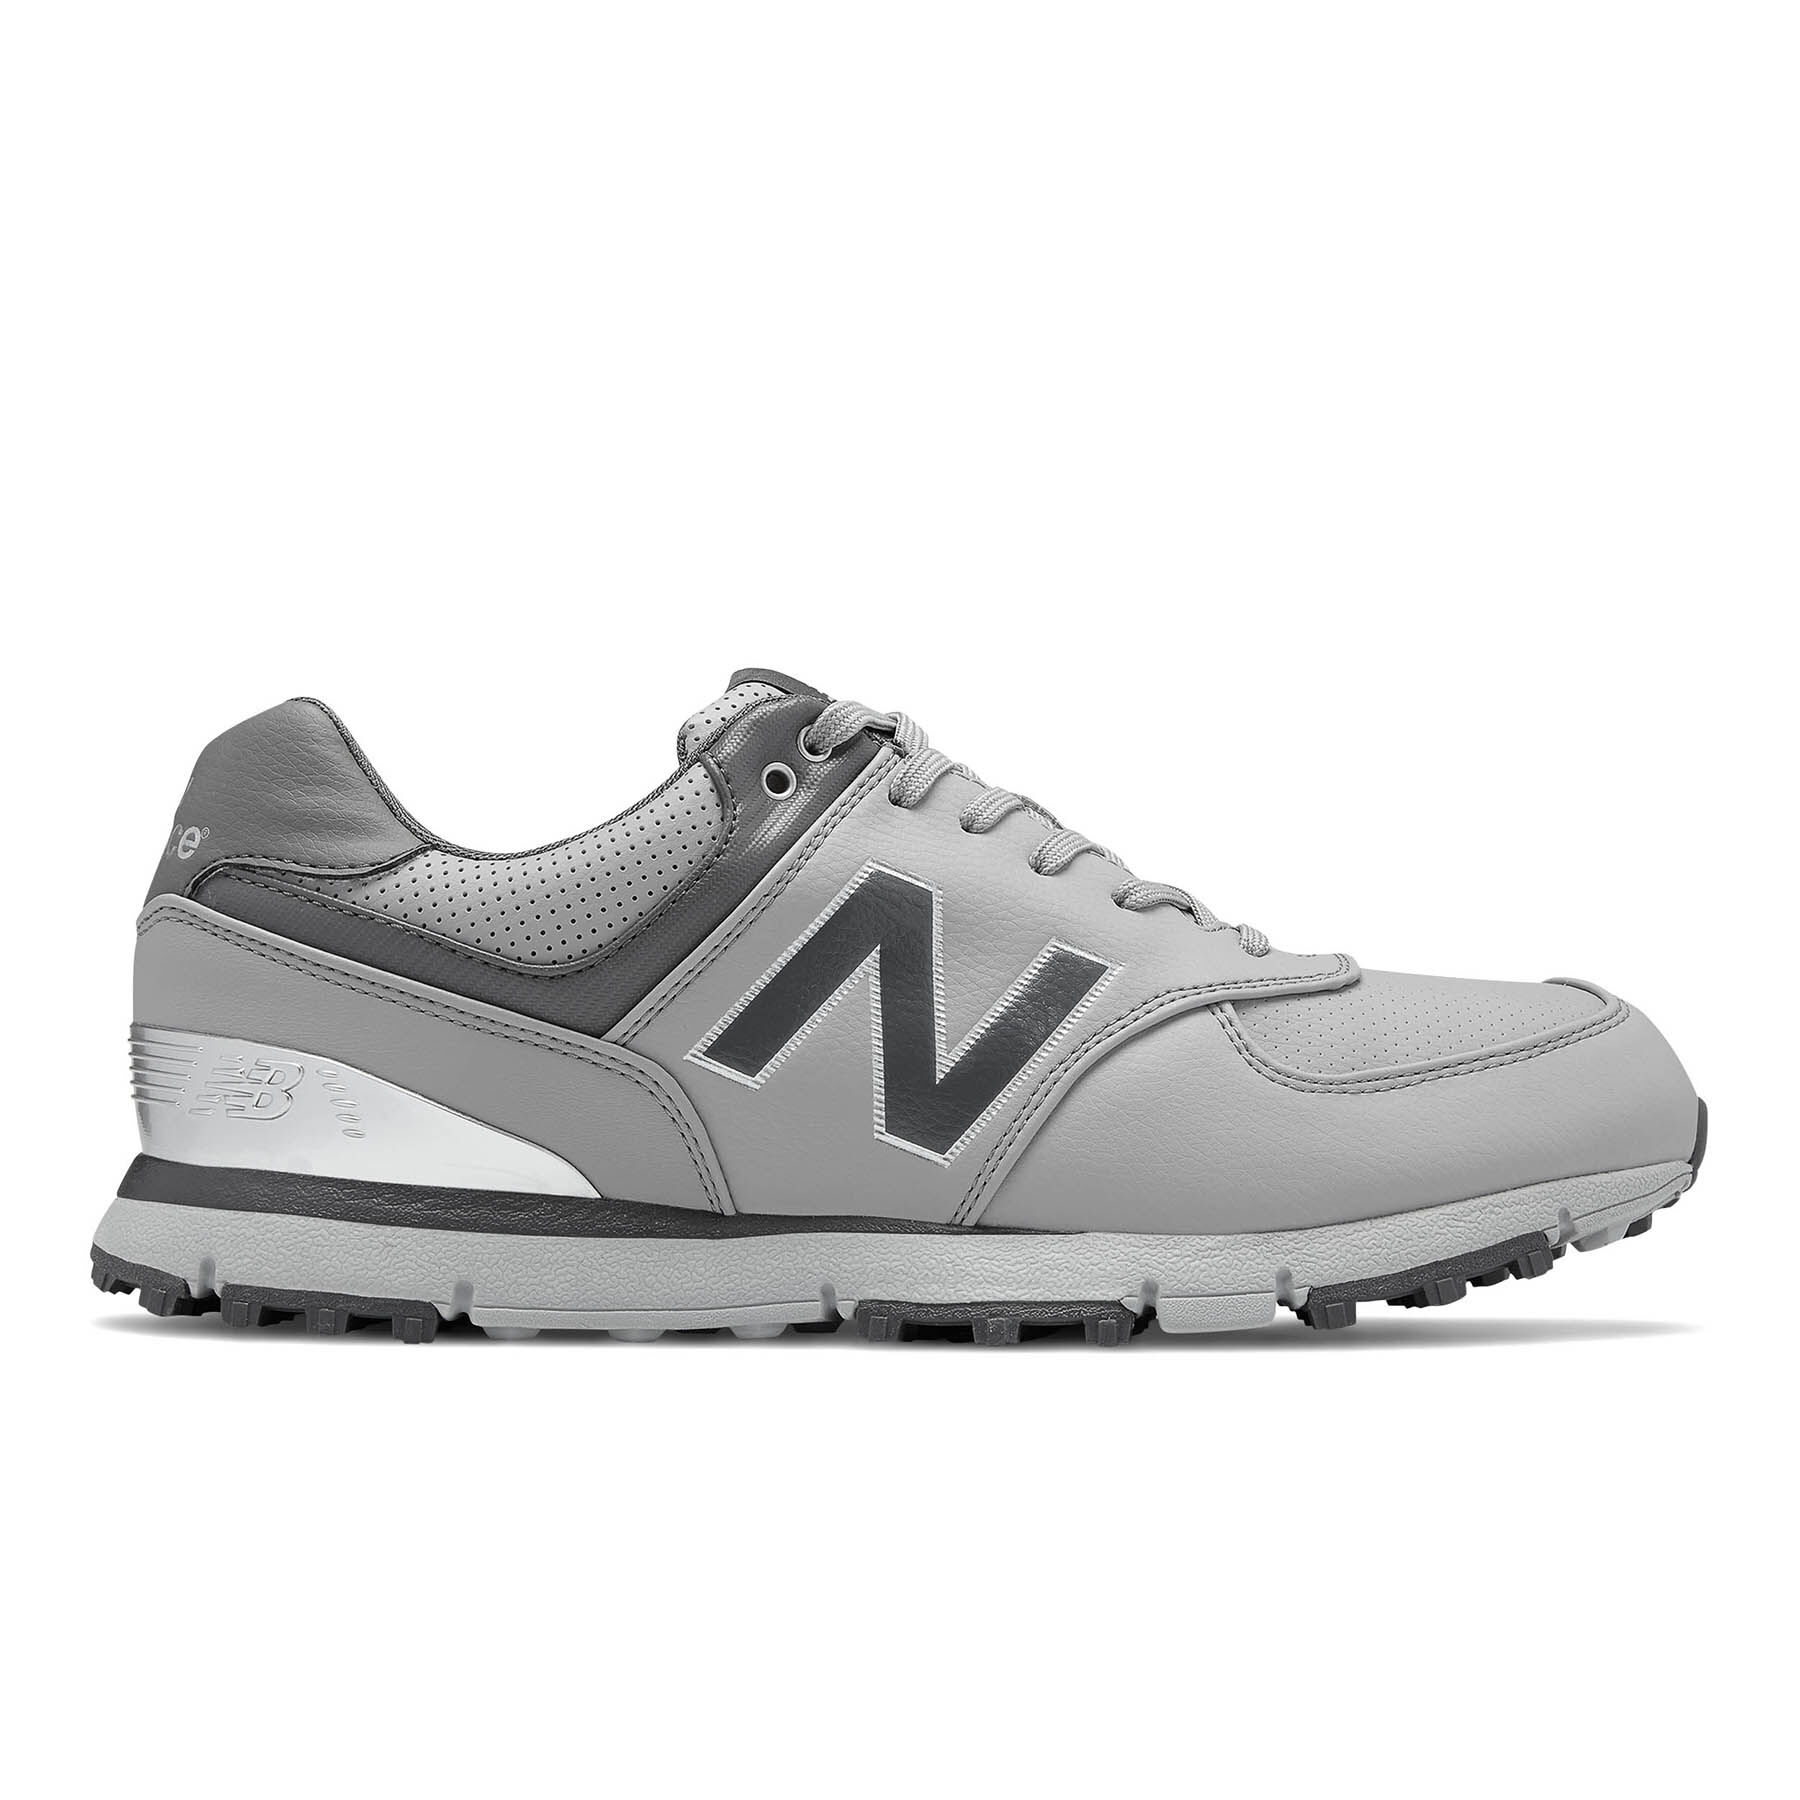 New Balance 574 SL Men's Golf Shoe 